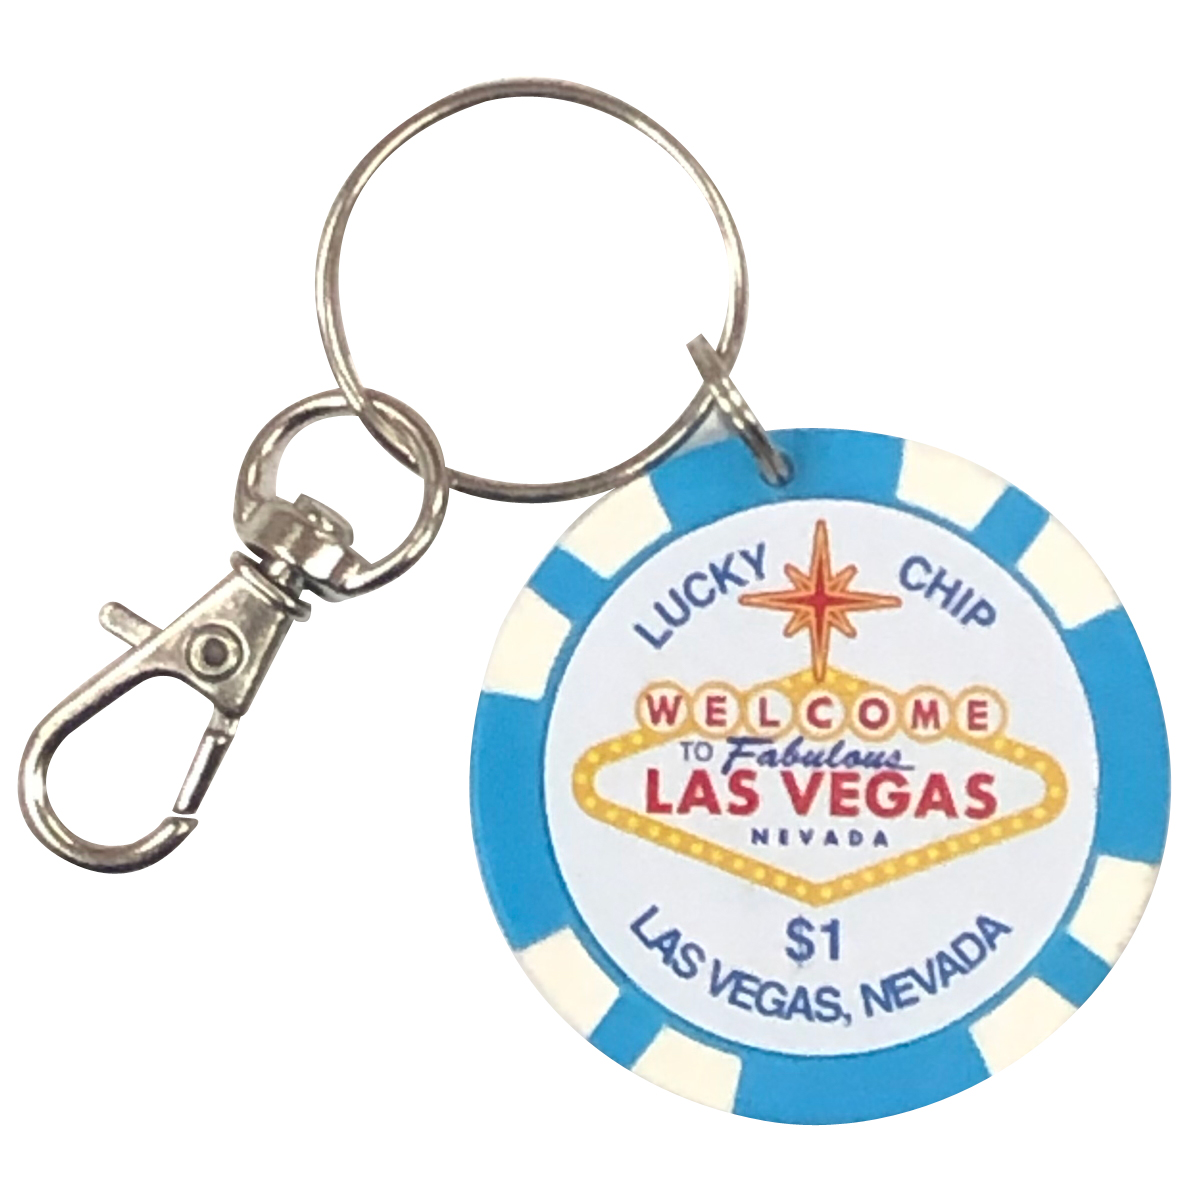 Las Vegas Key Chain, $1 Lucky Poker Chip Blue